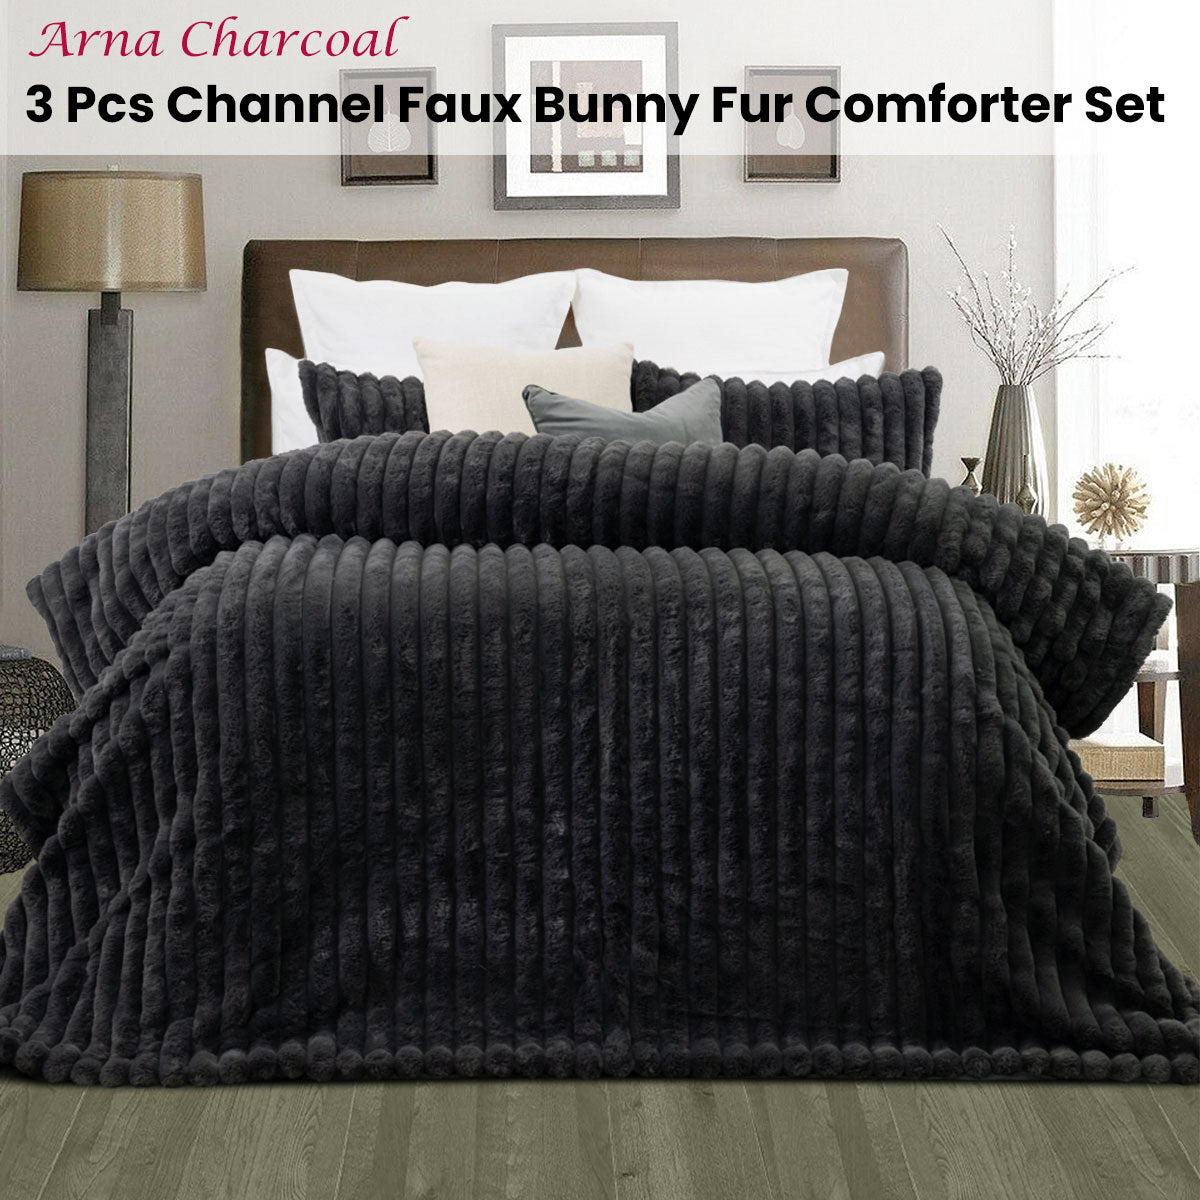 King Jane Barrington Arna Charcoal 3 Pcs Channel Faux Fur Comforter Set